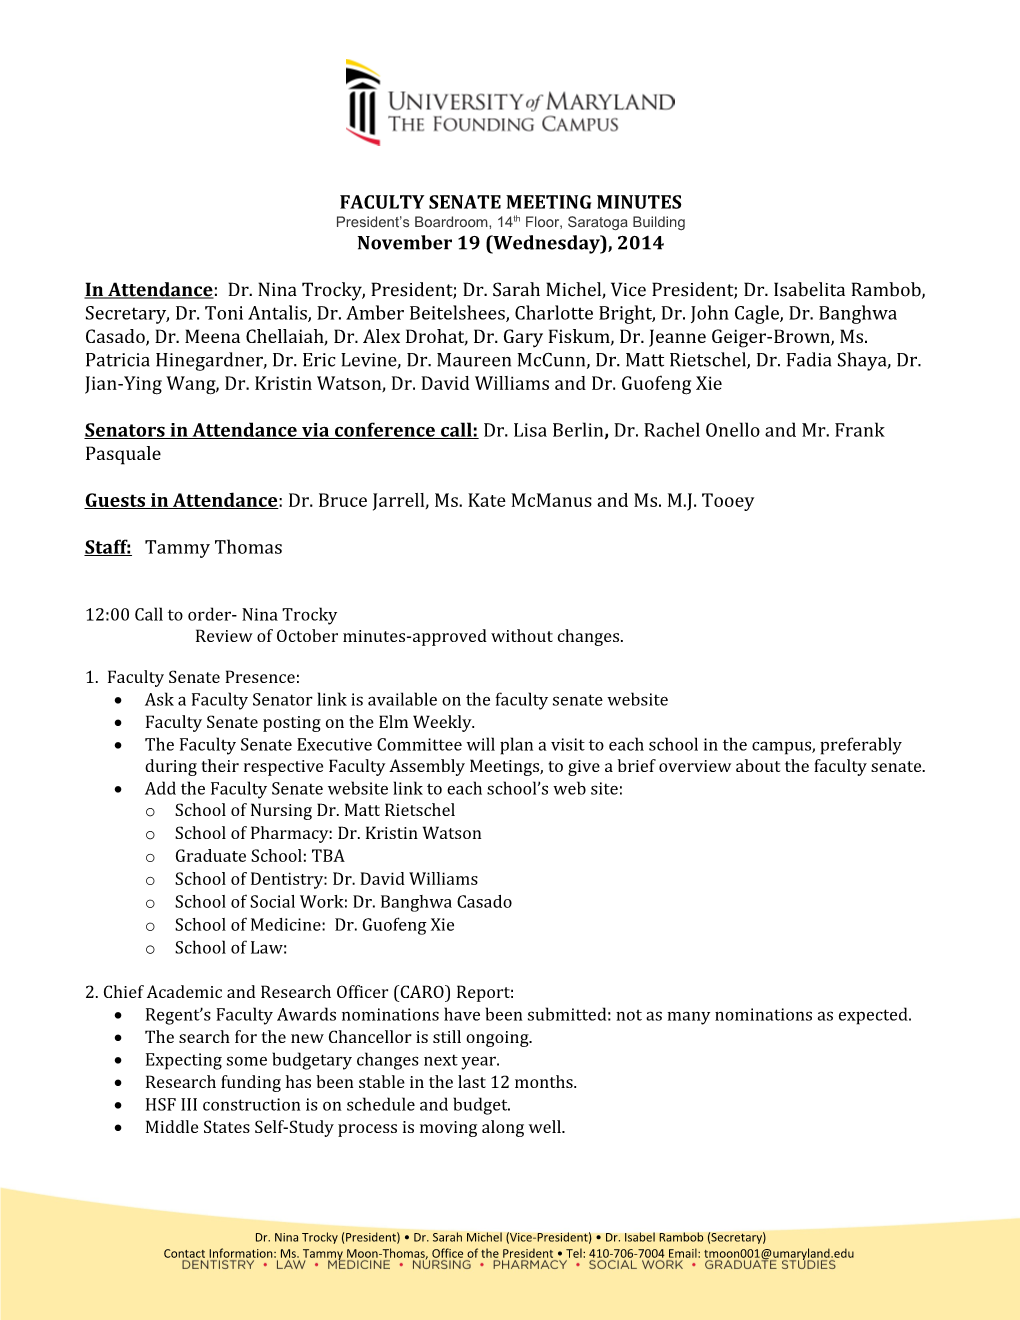 Faculty Senate Meeting Minutes s6